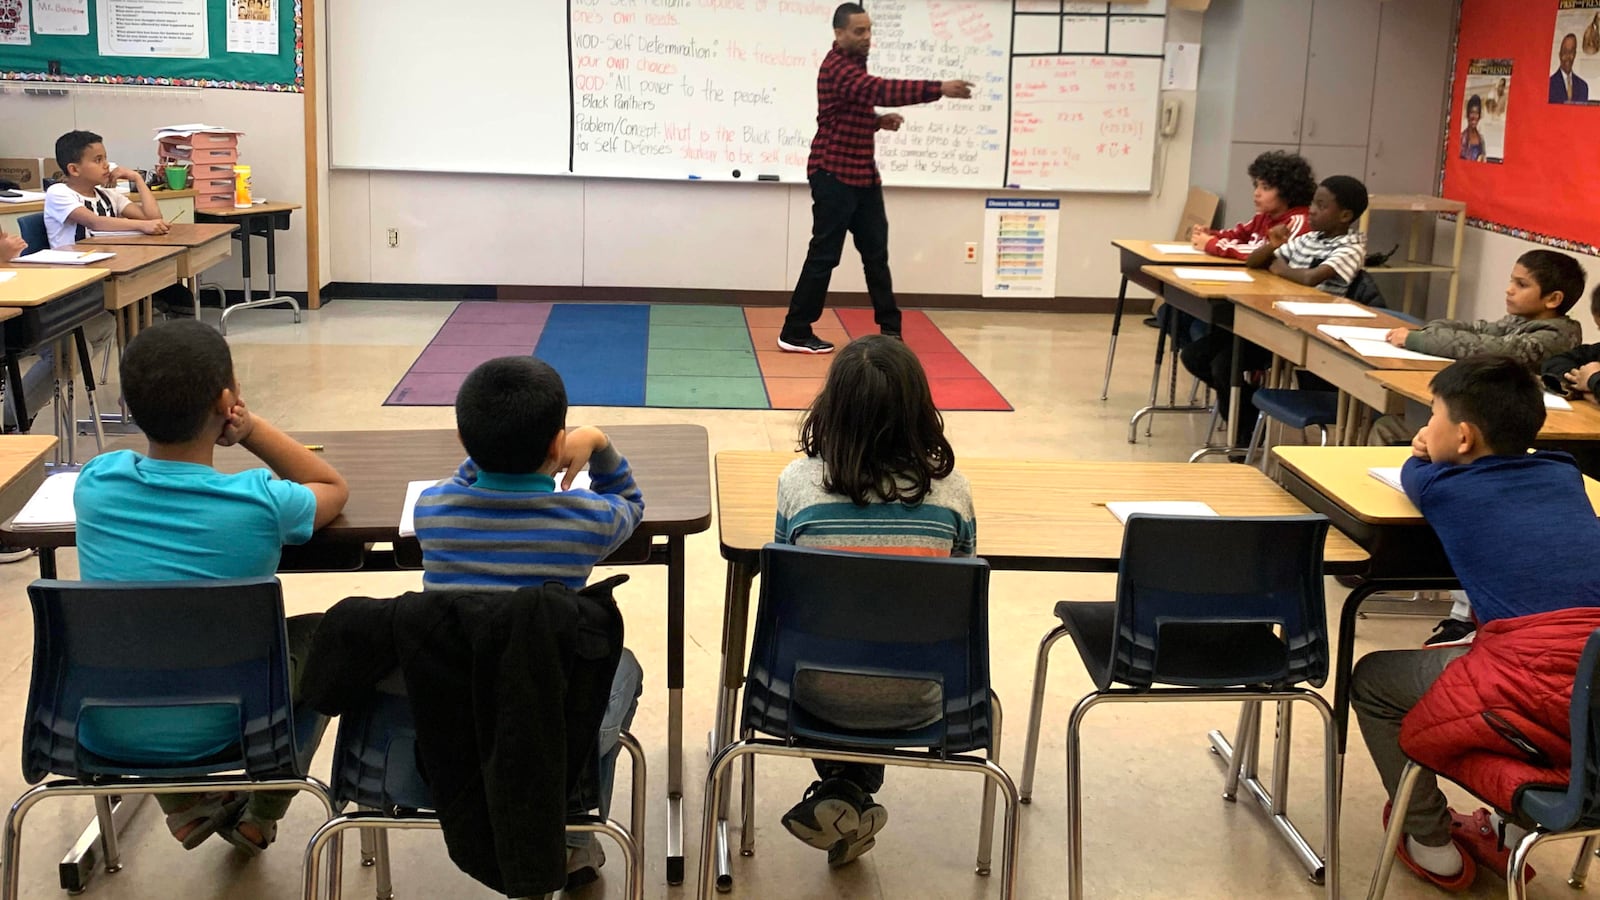 Bryan Bassette teaches at Piedmont Avenue Elementary as part of the Manhood Development Program in Oakland Unified School District.